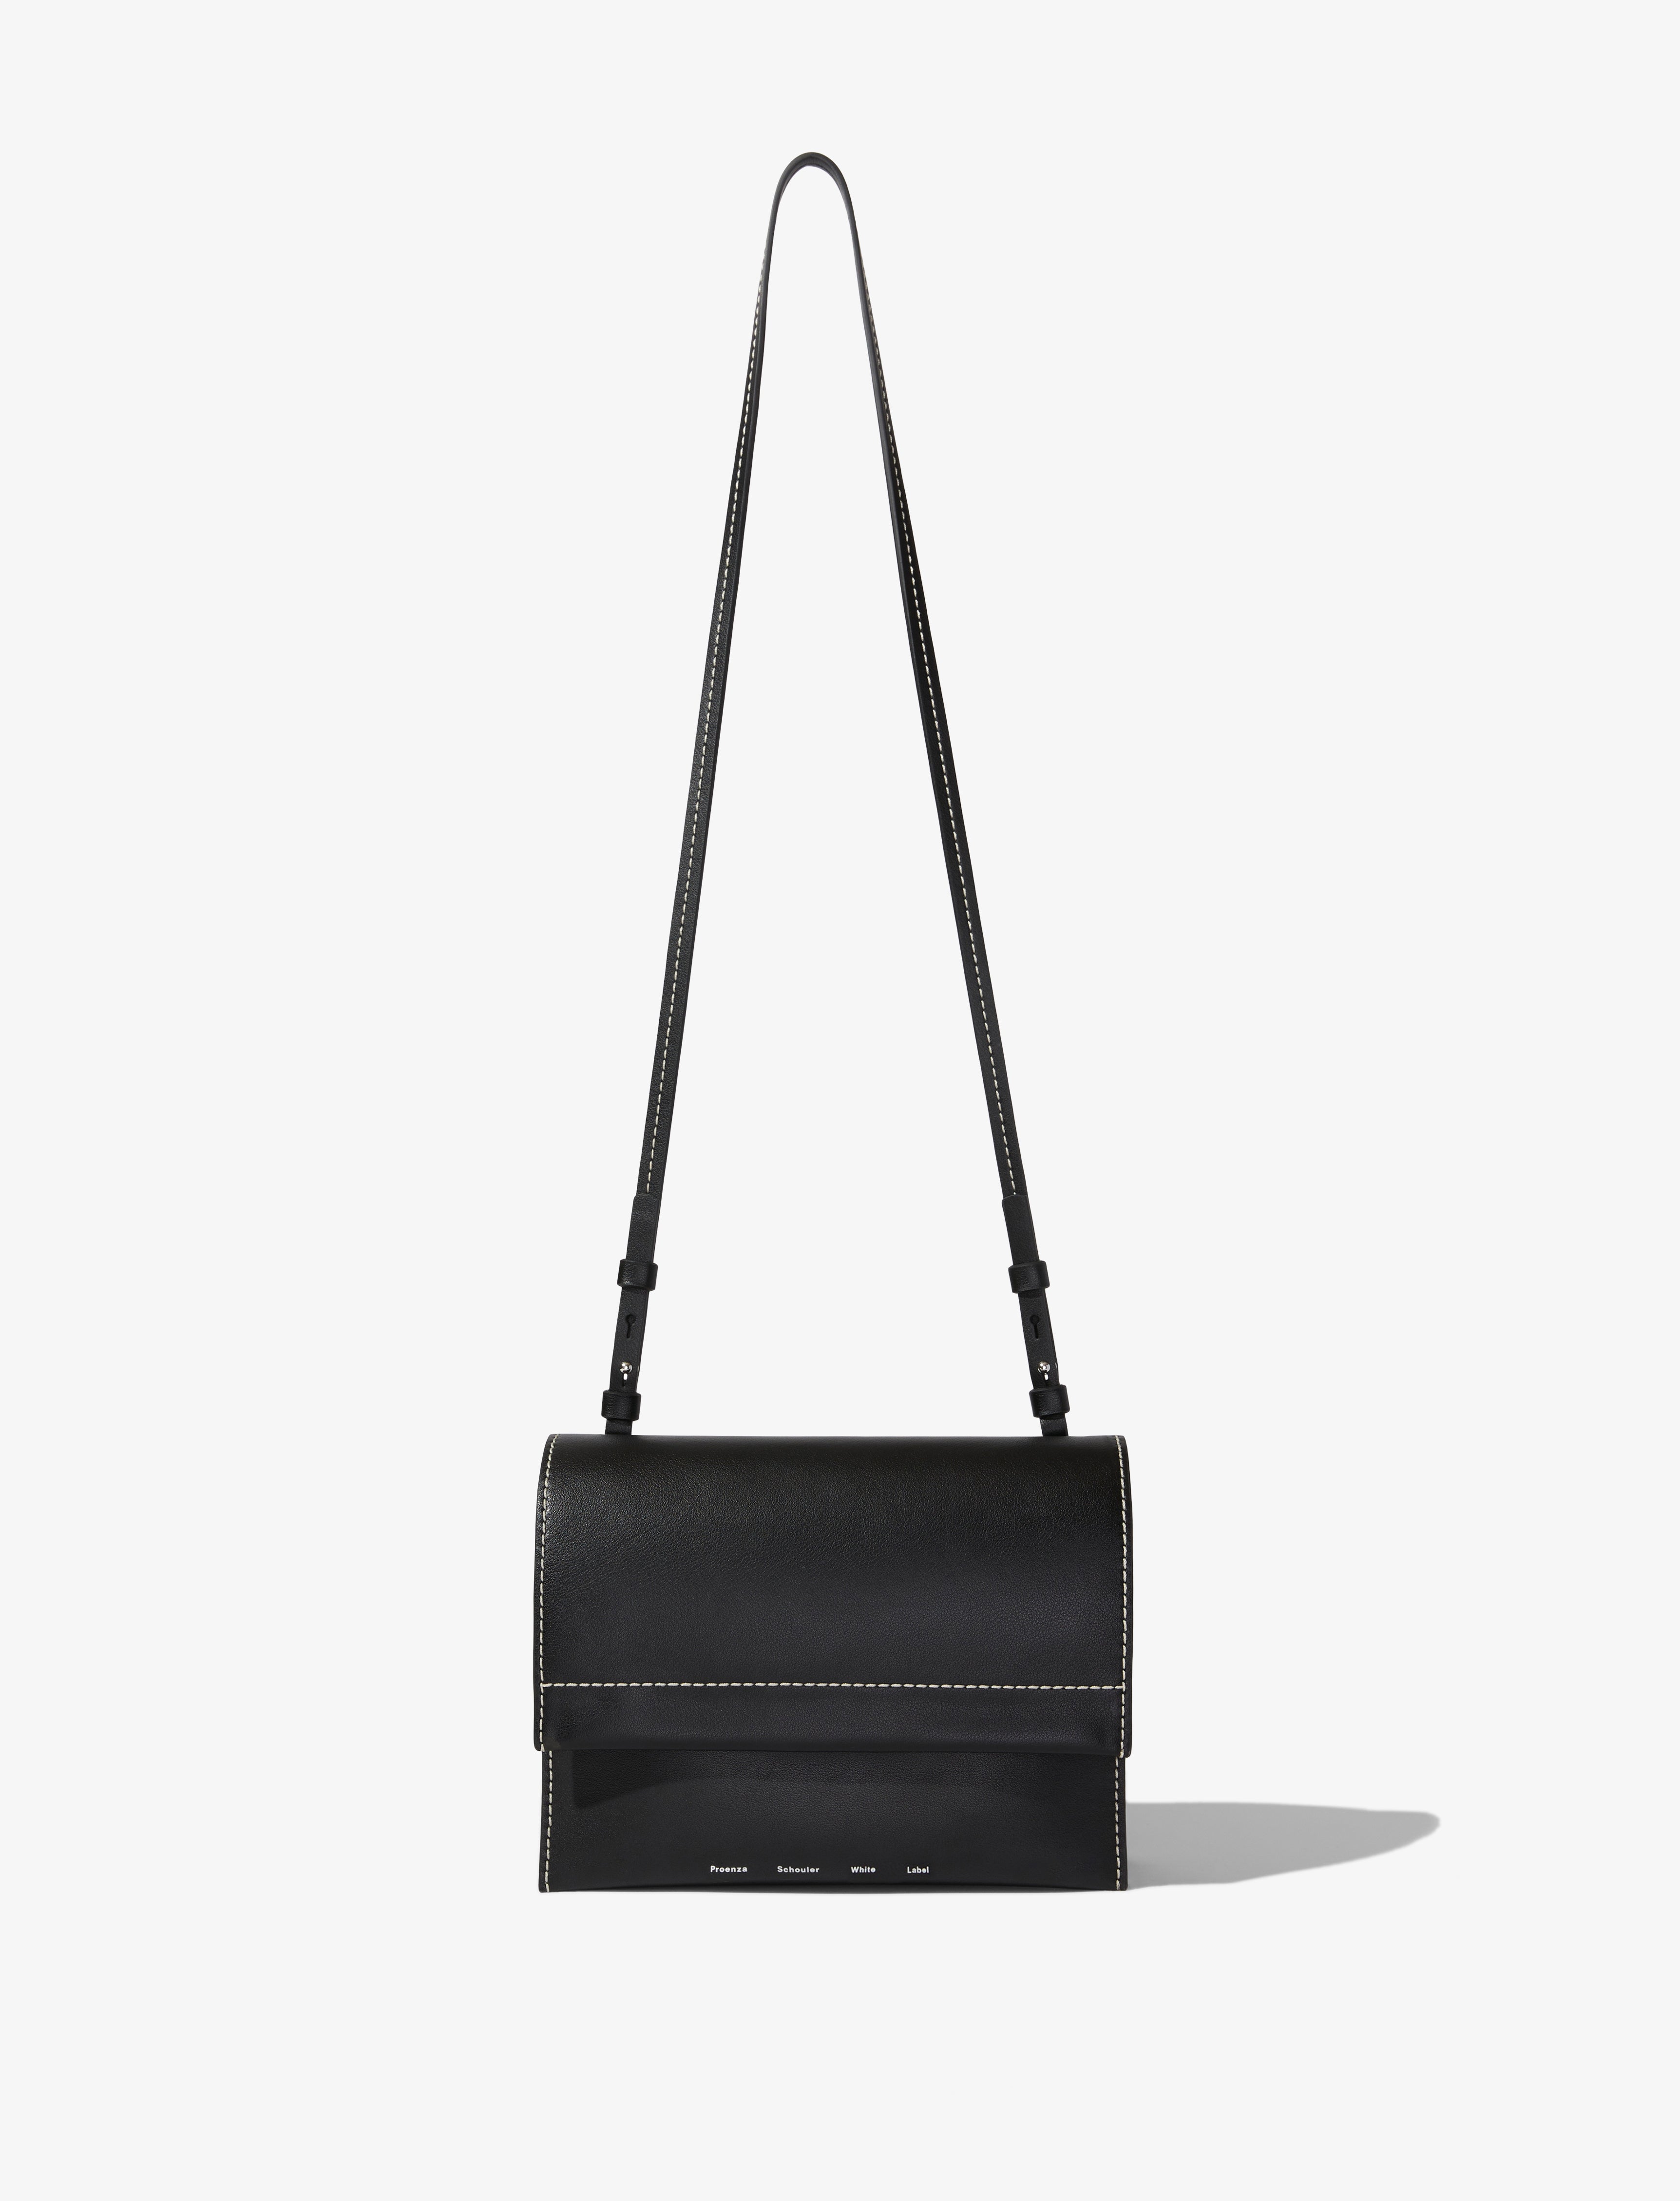 Kid Bags Girls Shoulder Bag Pearl Chain Messenger New Fashion Cute Mini PVC  Jelly Bag Grid Flap Bag